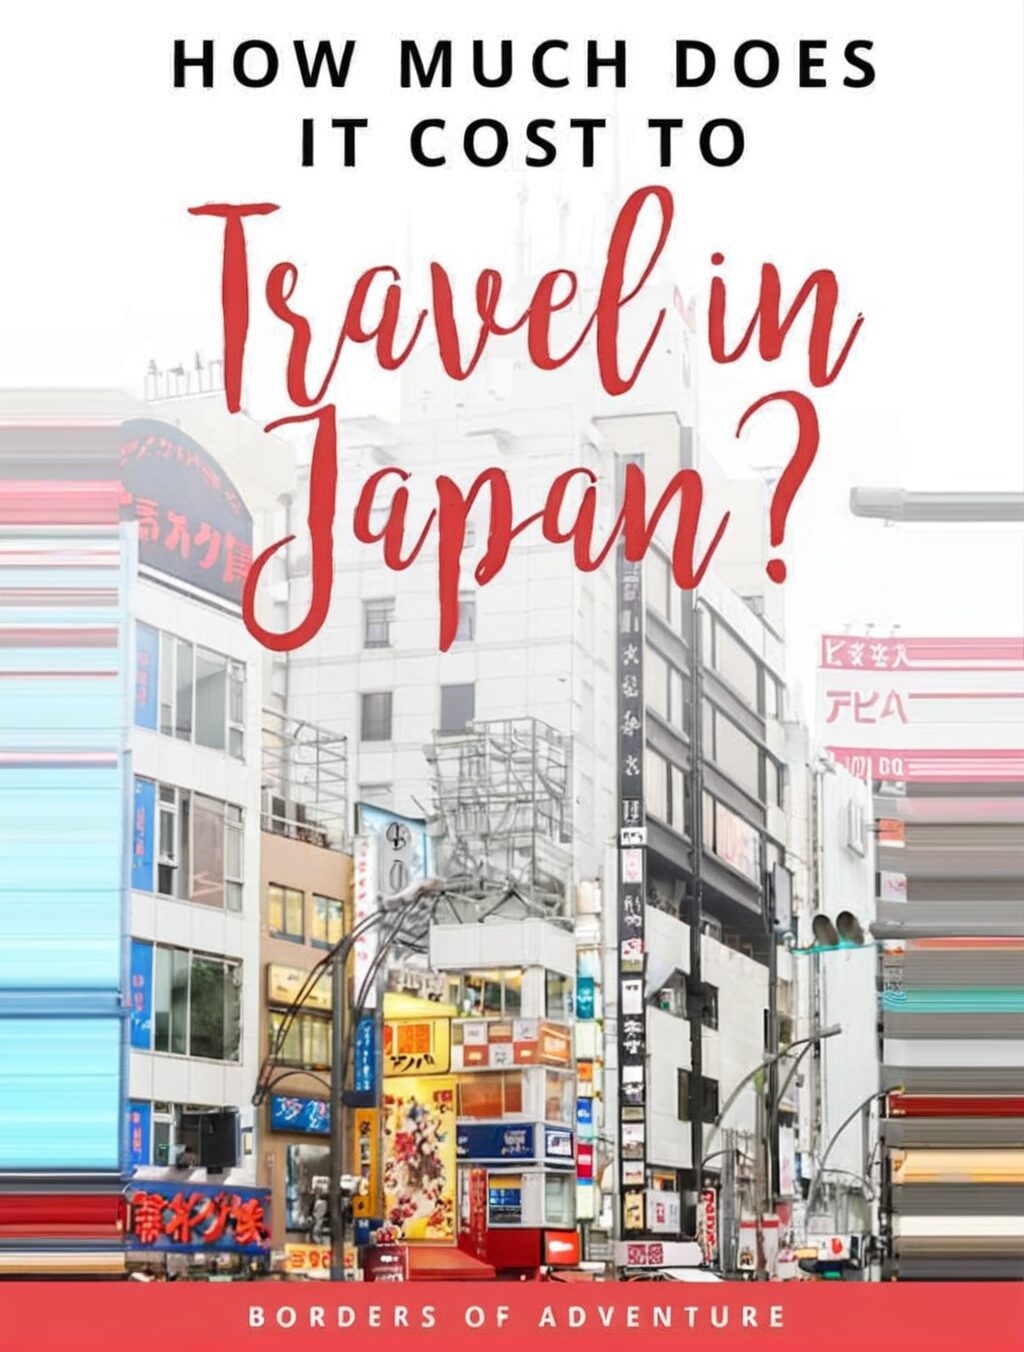 average cost of 2 week trip to japan